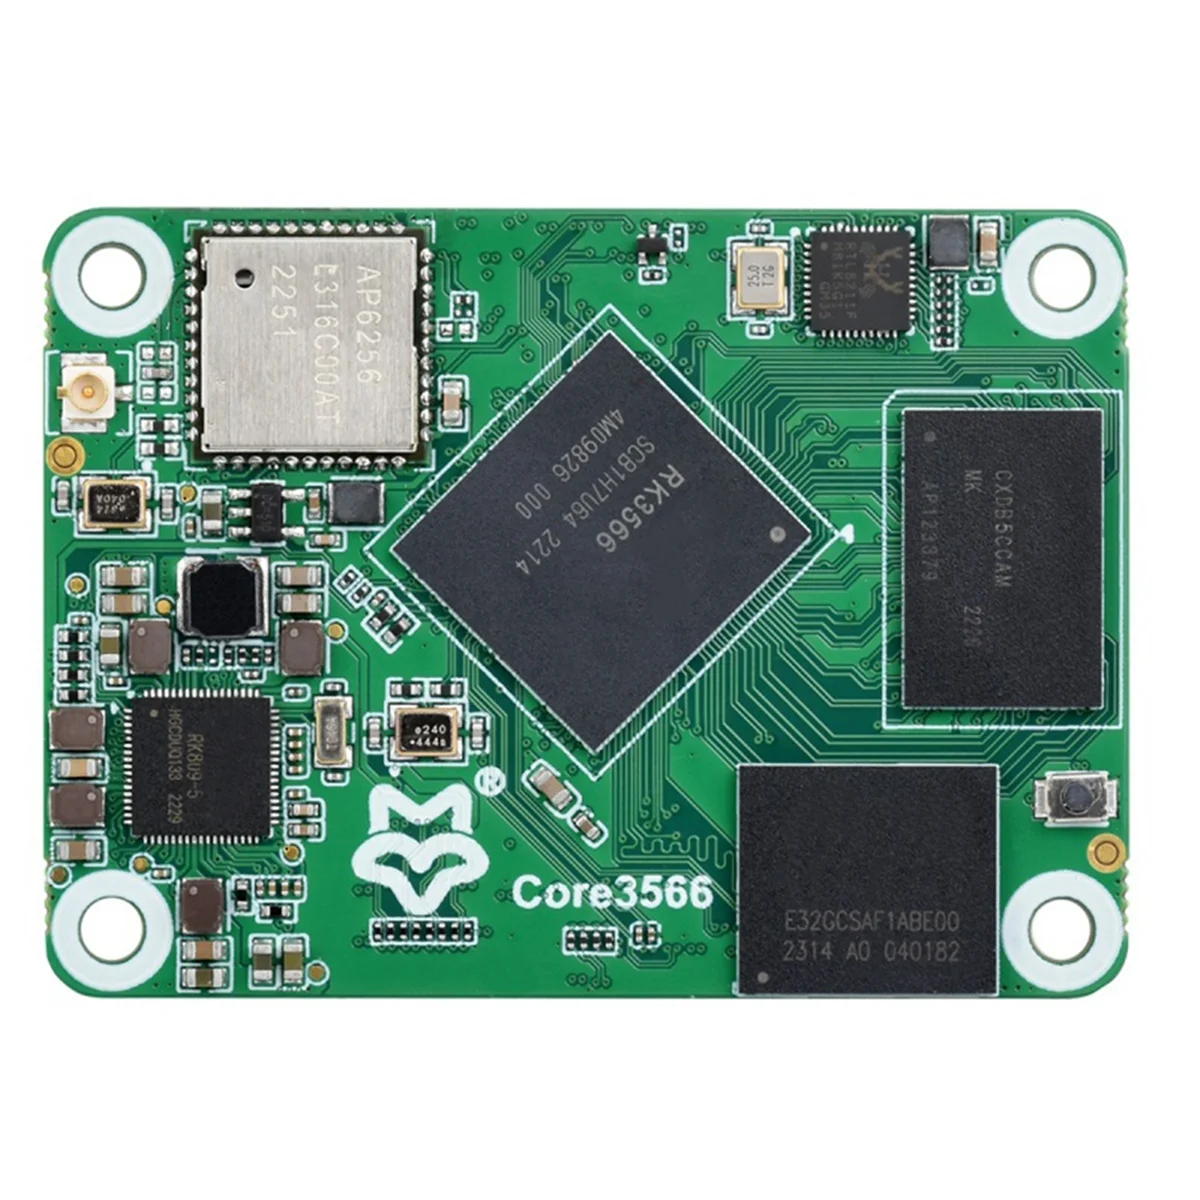 

Core3566 Module, Rockchip RK3566 Quad-Core Processor, Compatible with for Raspberry Pi CM4,2GB+ 32GB Emmc with Wifi